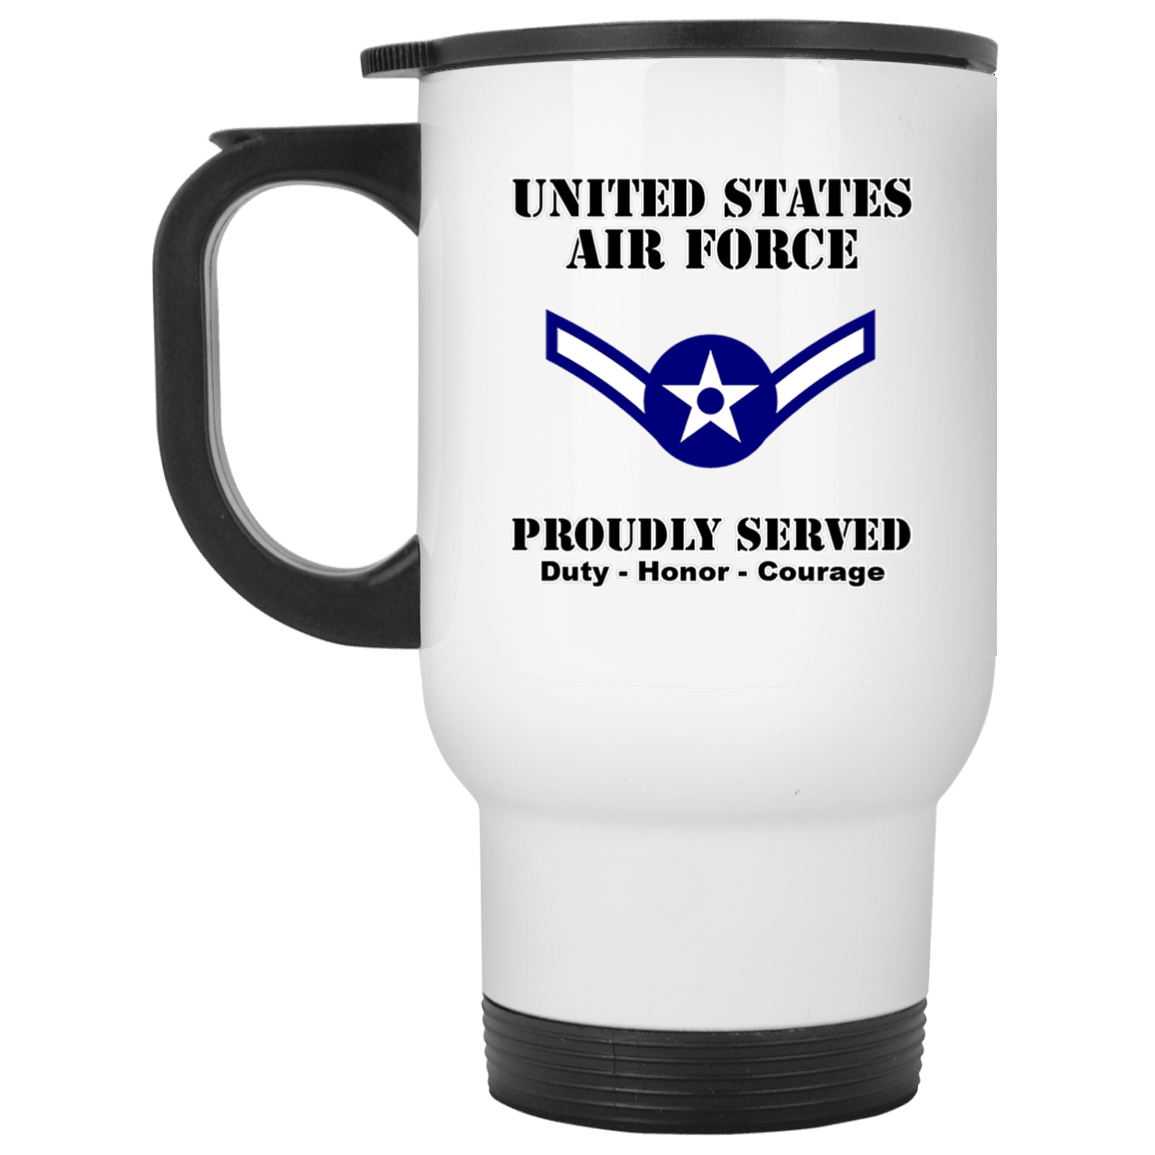 US Air Force E-2 Airman Amn E2 Ranks Enlisted Airman Ranks White Coffee Mug - Stainless Travel Mug-Mug-USAF-Ranks-Veterans Nation